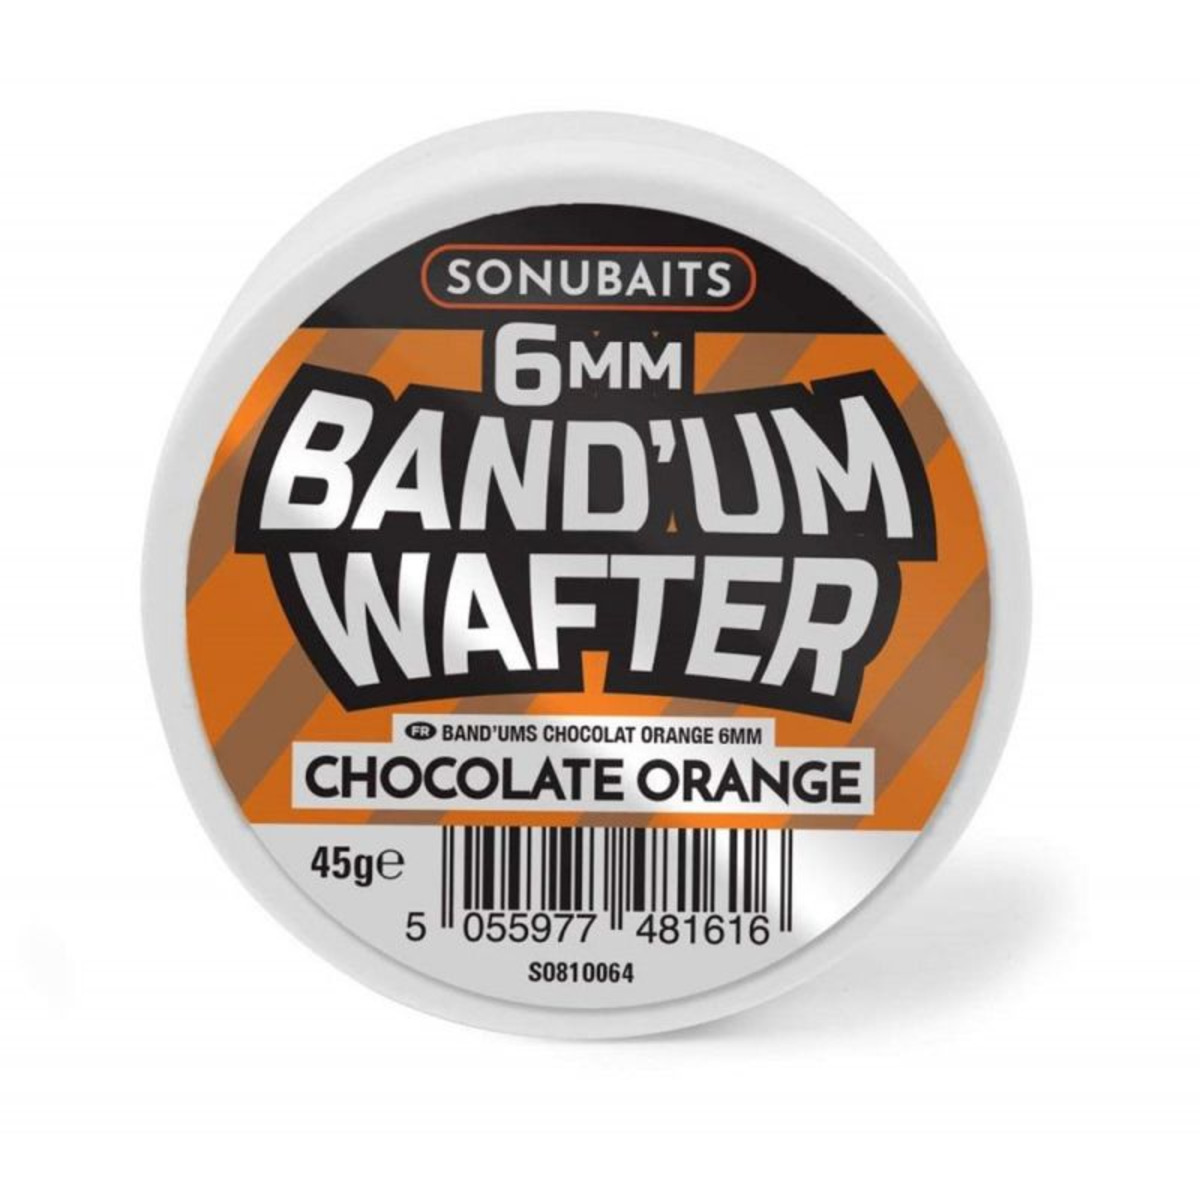 Sonubaits Band’um Wafters - 6 mm - Chocolate Orange